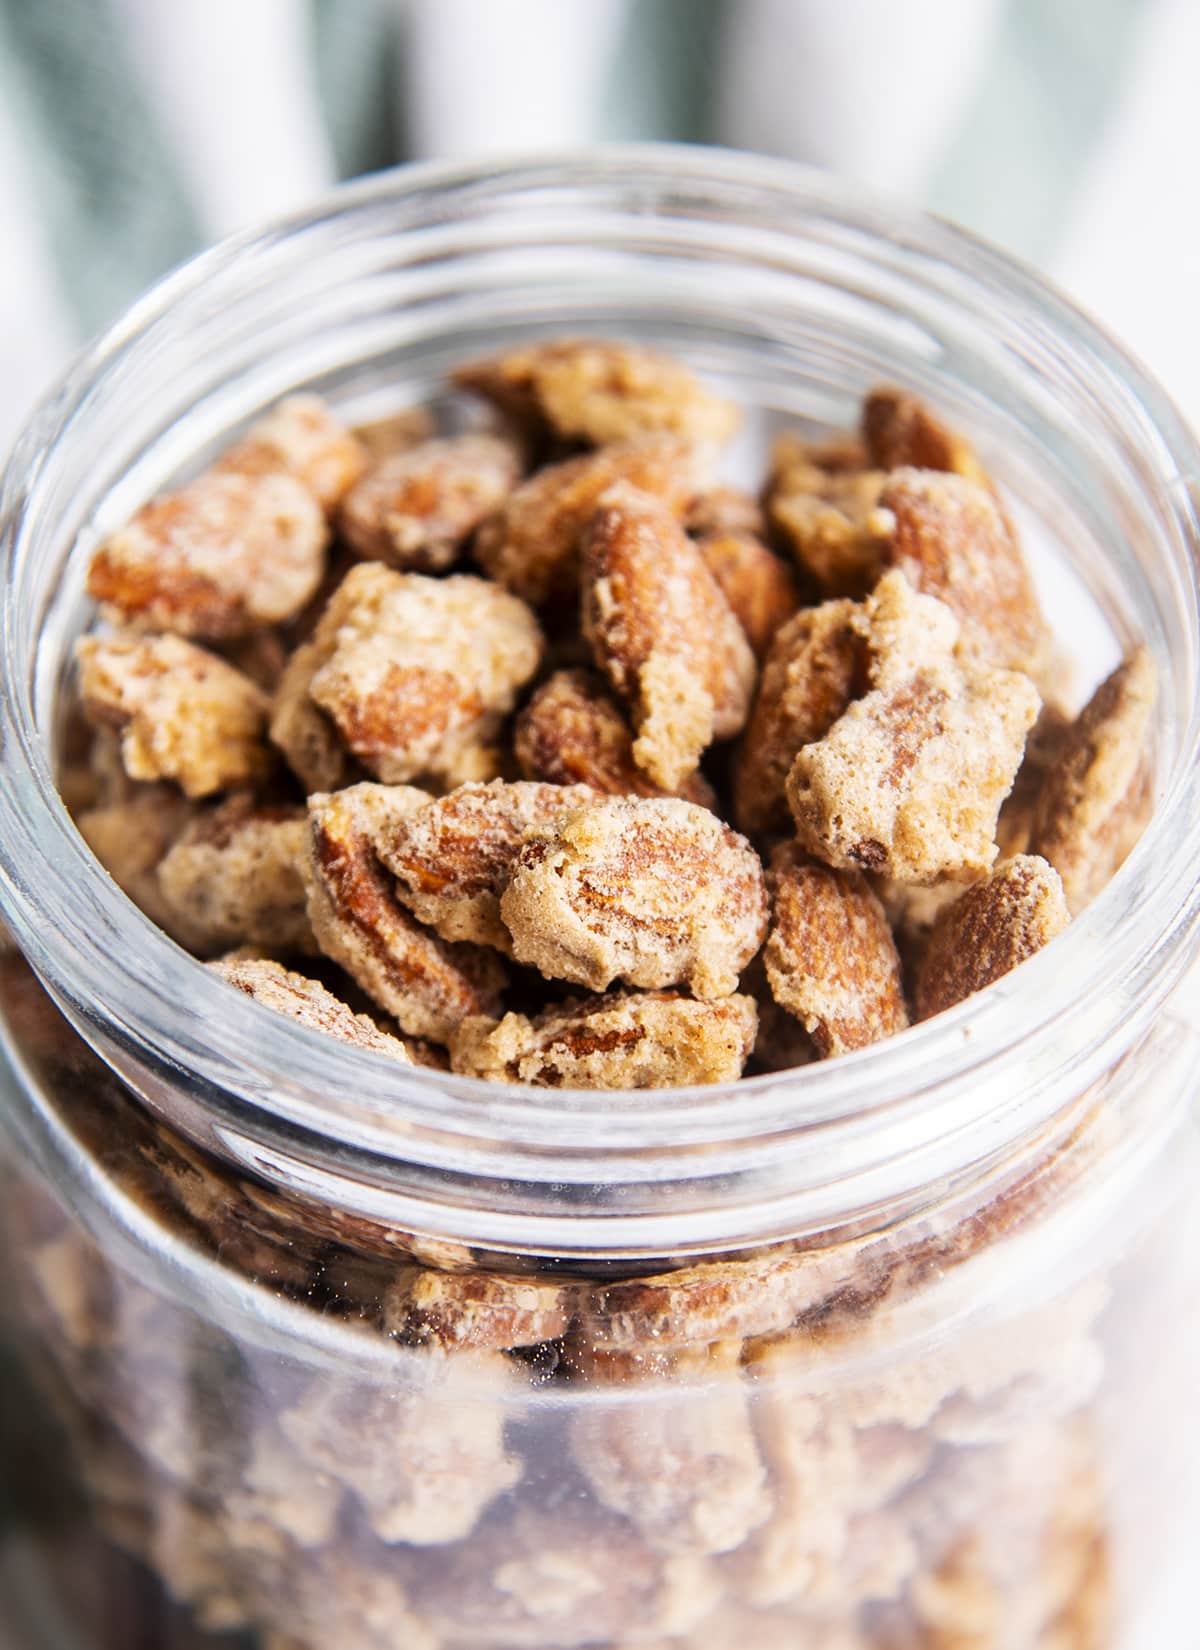 A close up of cinnamon sugar candied almonds in a jar.